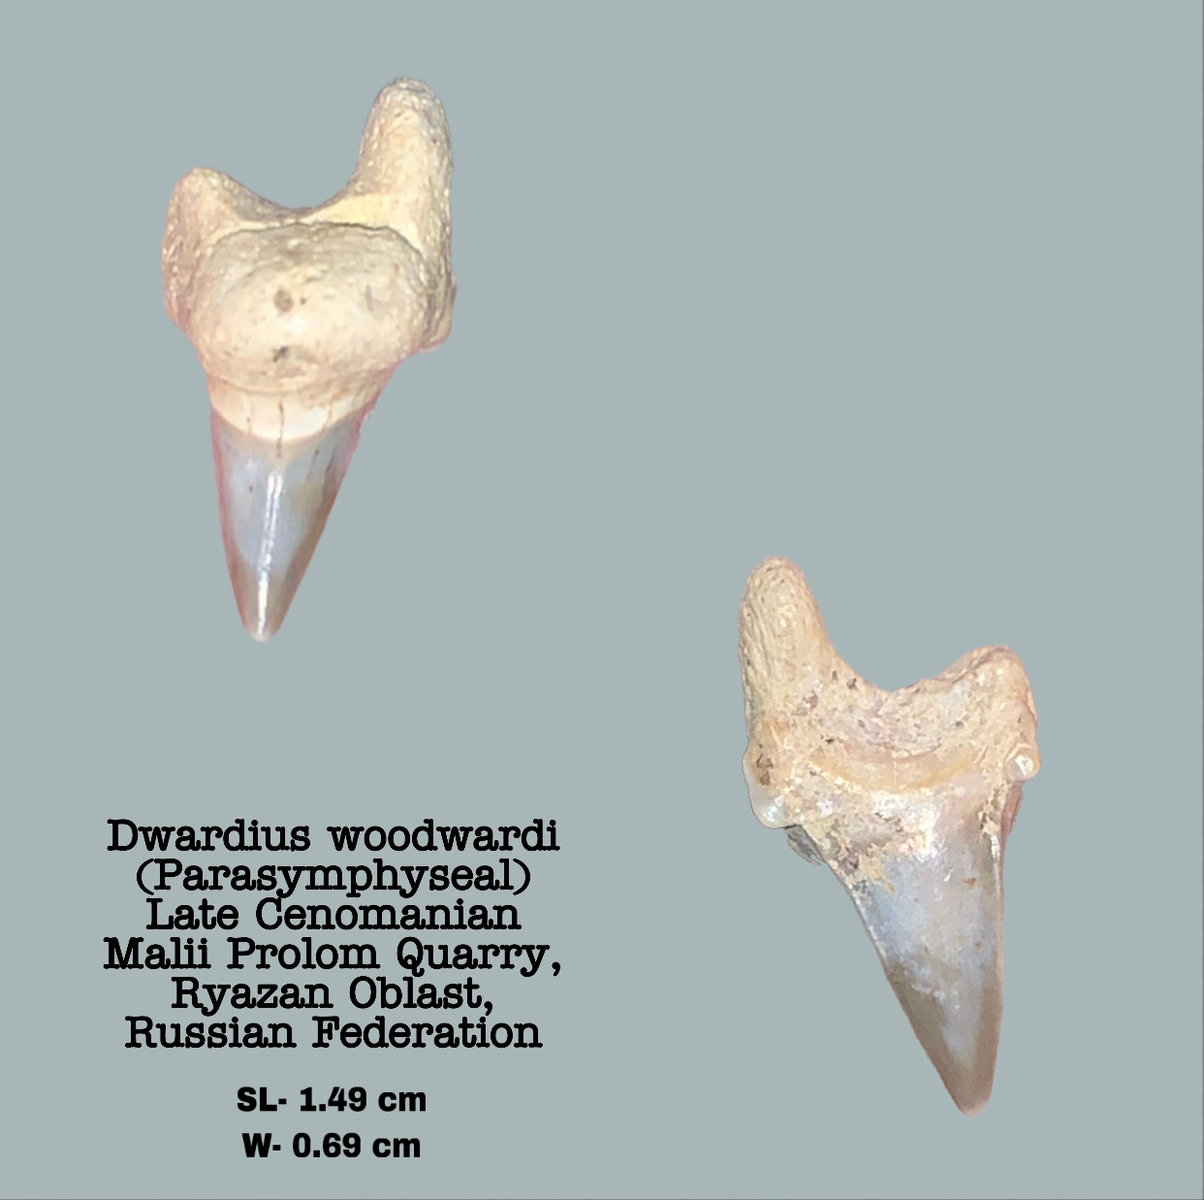 Dwardius woodwardi (Parasymphyseal)